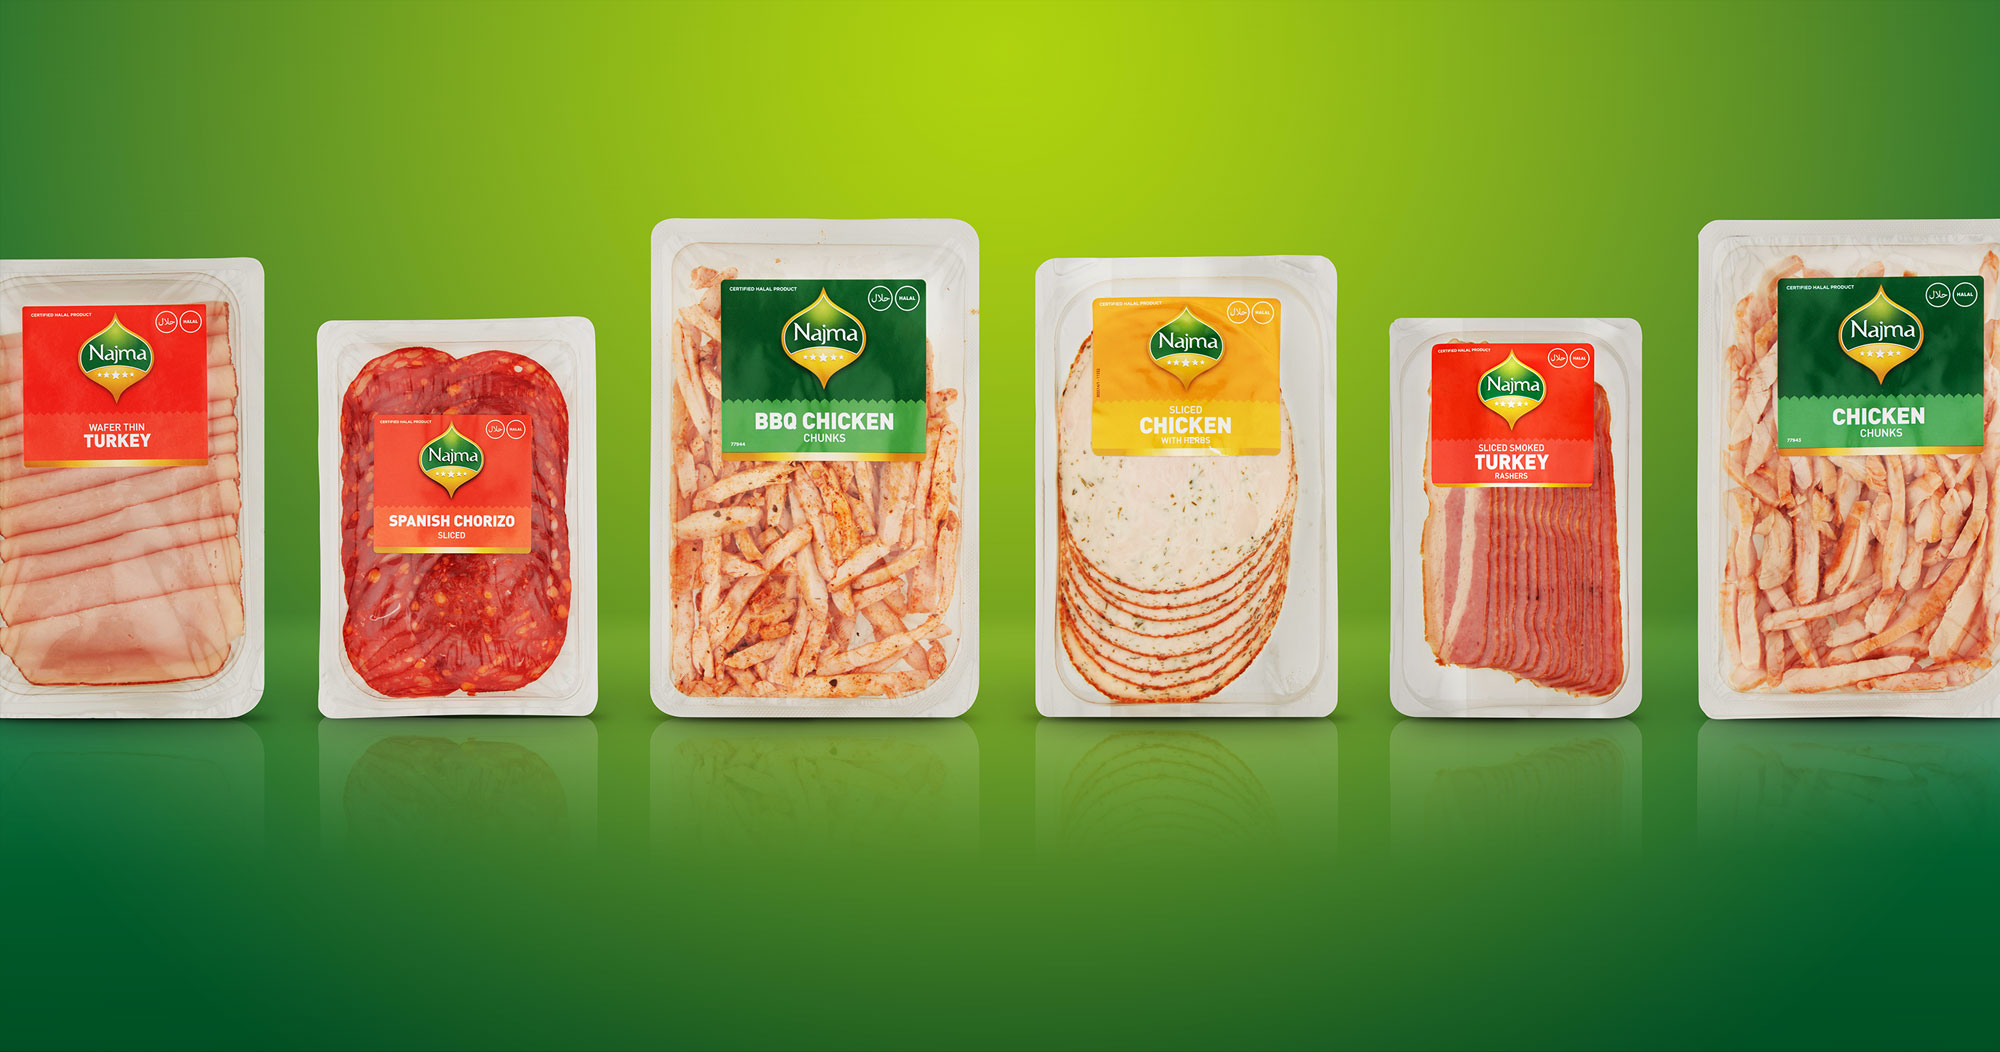 Golden Acre Range of Meat Packaging designs